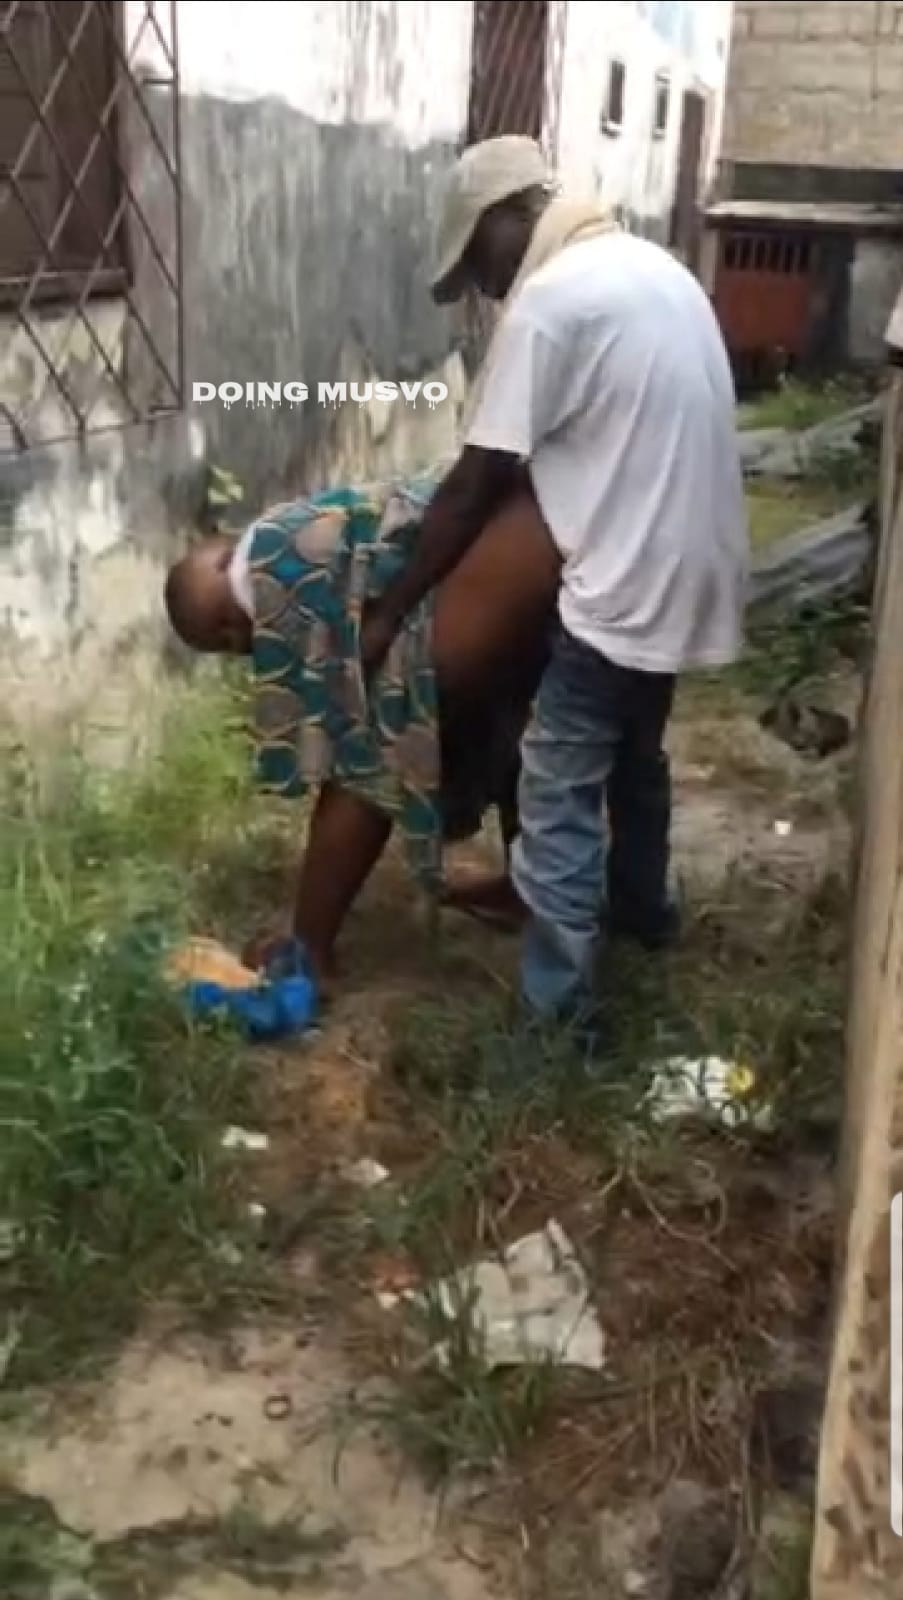 Video : Doing musvo in public - Musvo Zimbabwe.